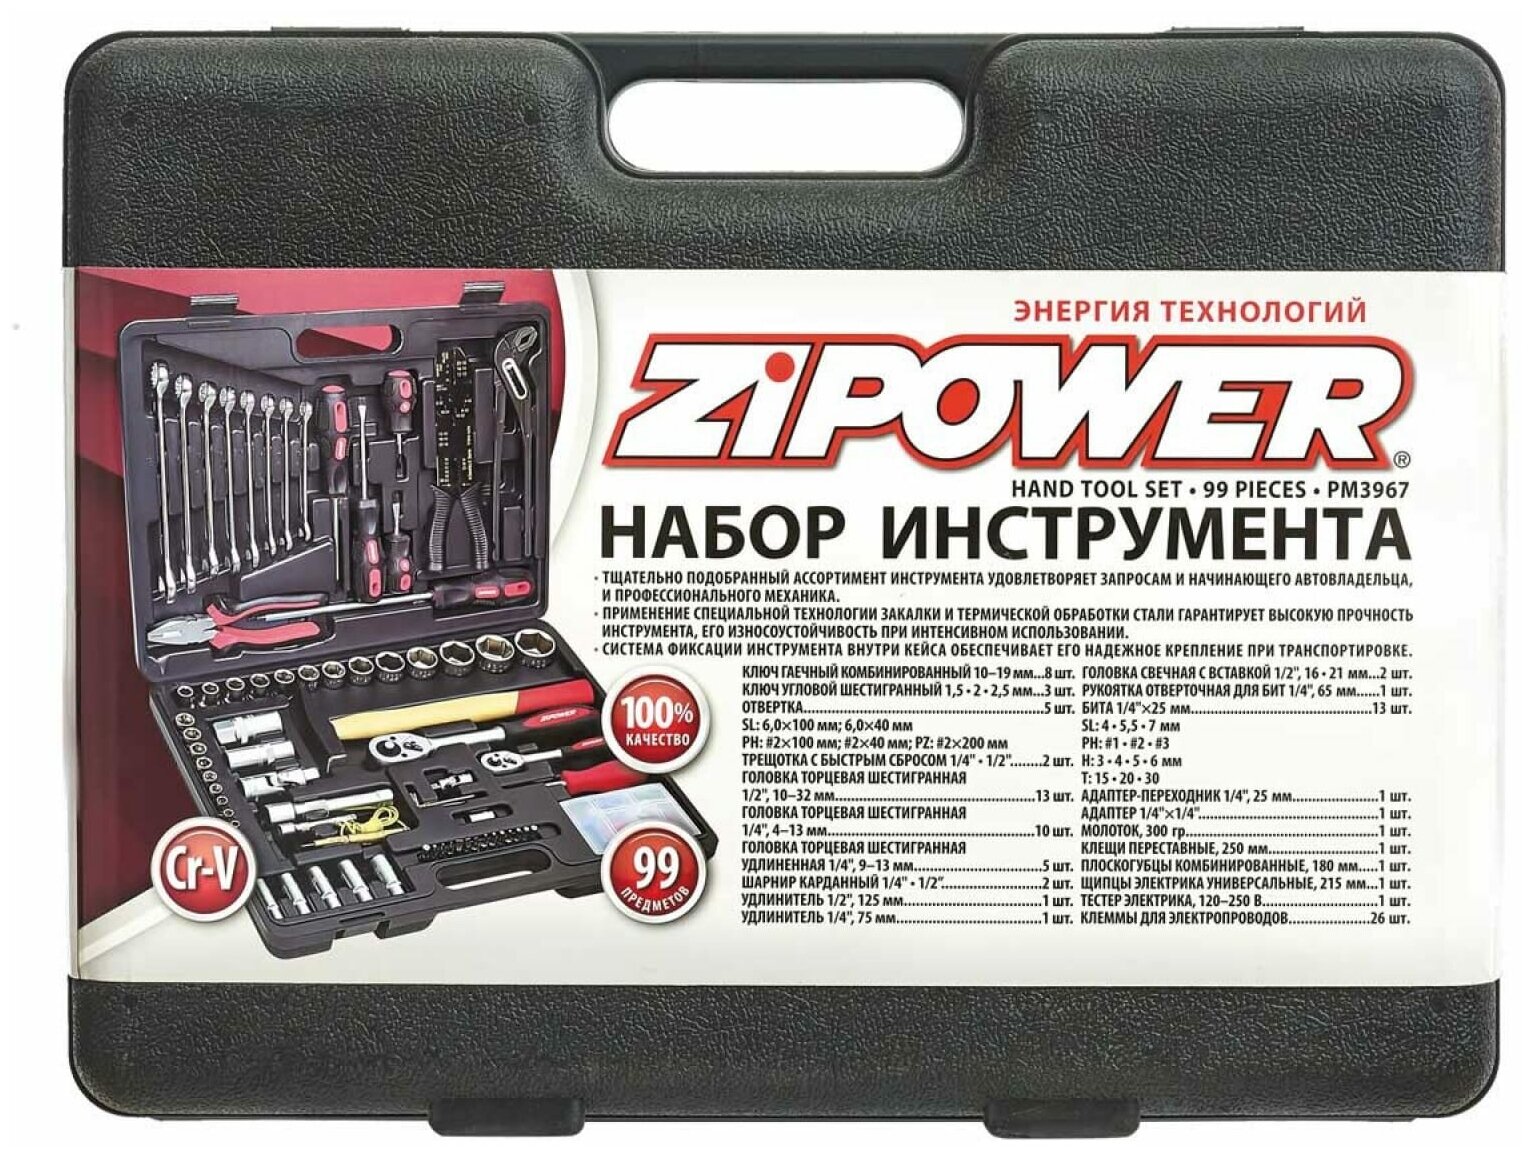 Набор инструментов Zipower - фото №2